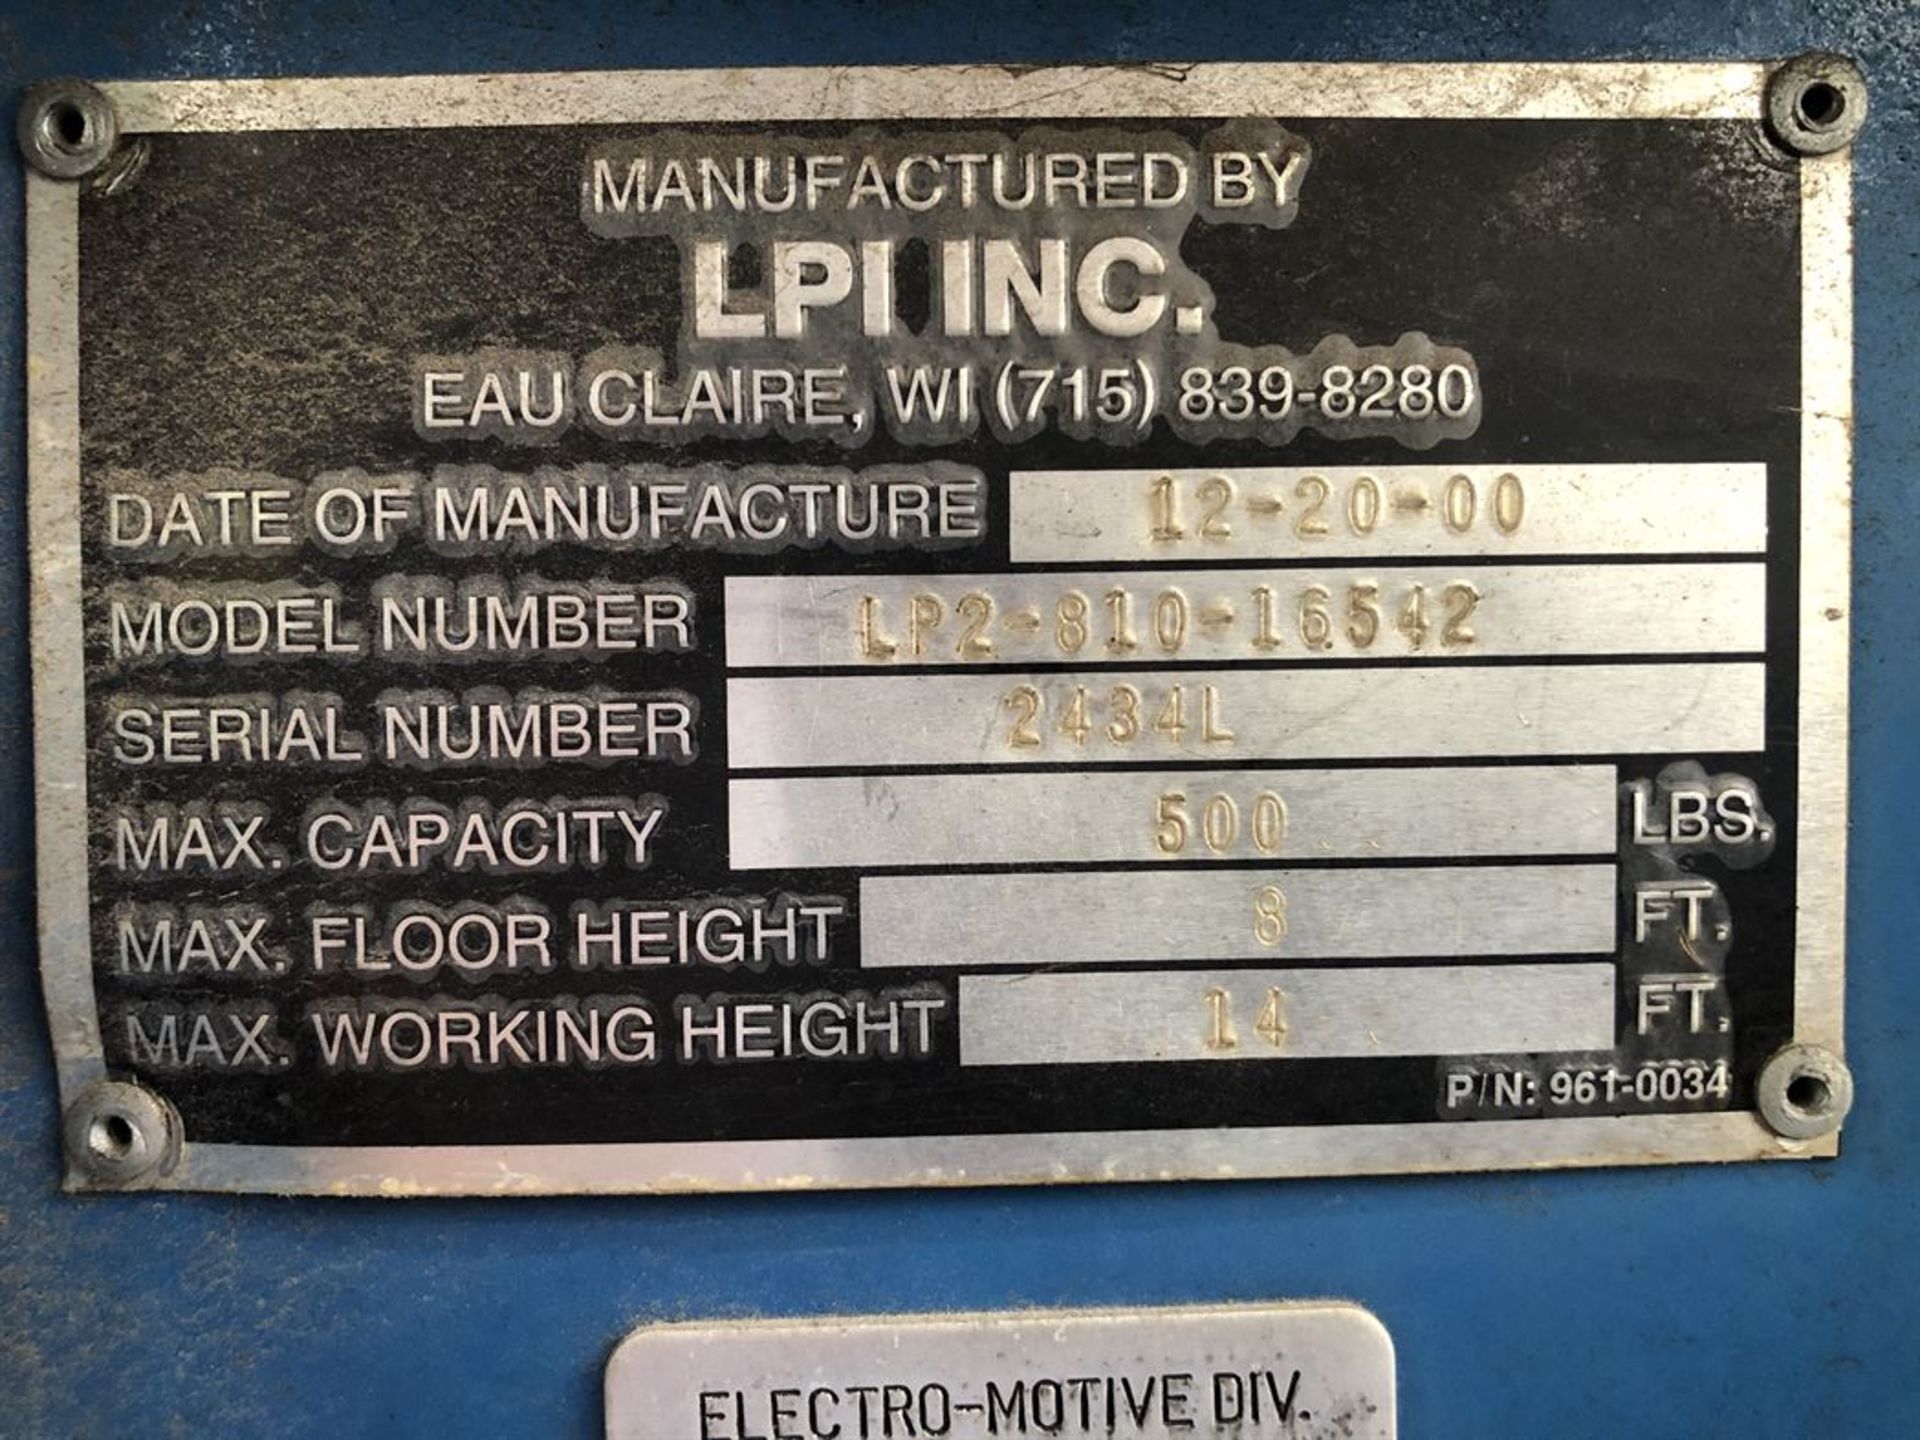 LPI LP2-810-16542 3-Axis Man Lift, 500 lb Capacity, s/n 2434L, (MSB Docks) - Image 3 of 3